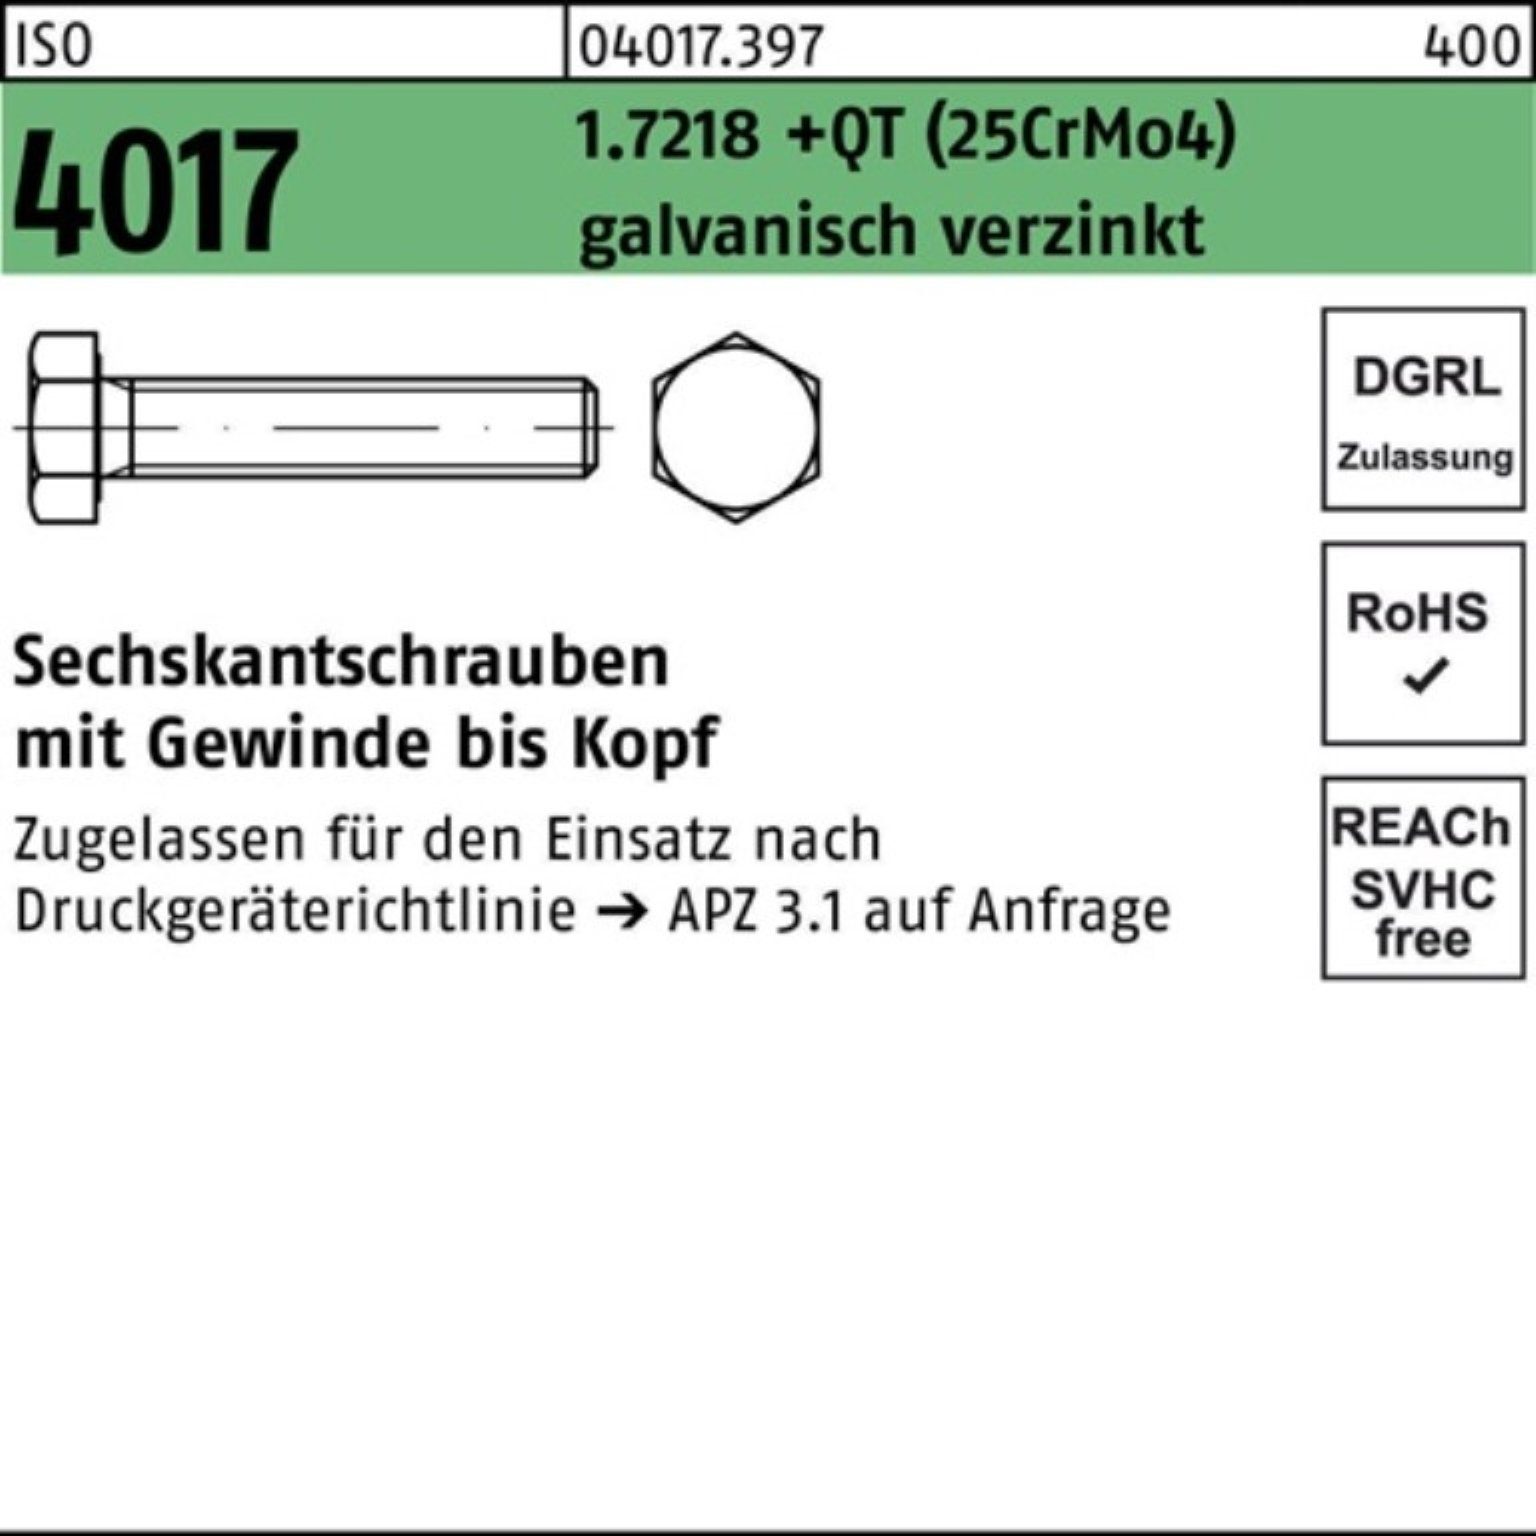 VG g Pack 4017 100er M27x80 ISO Sechskantschraube (25CrMo4) +QT Sechskantschraube 1.7218 Bufab